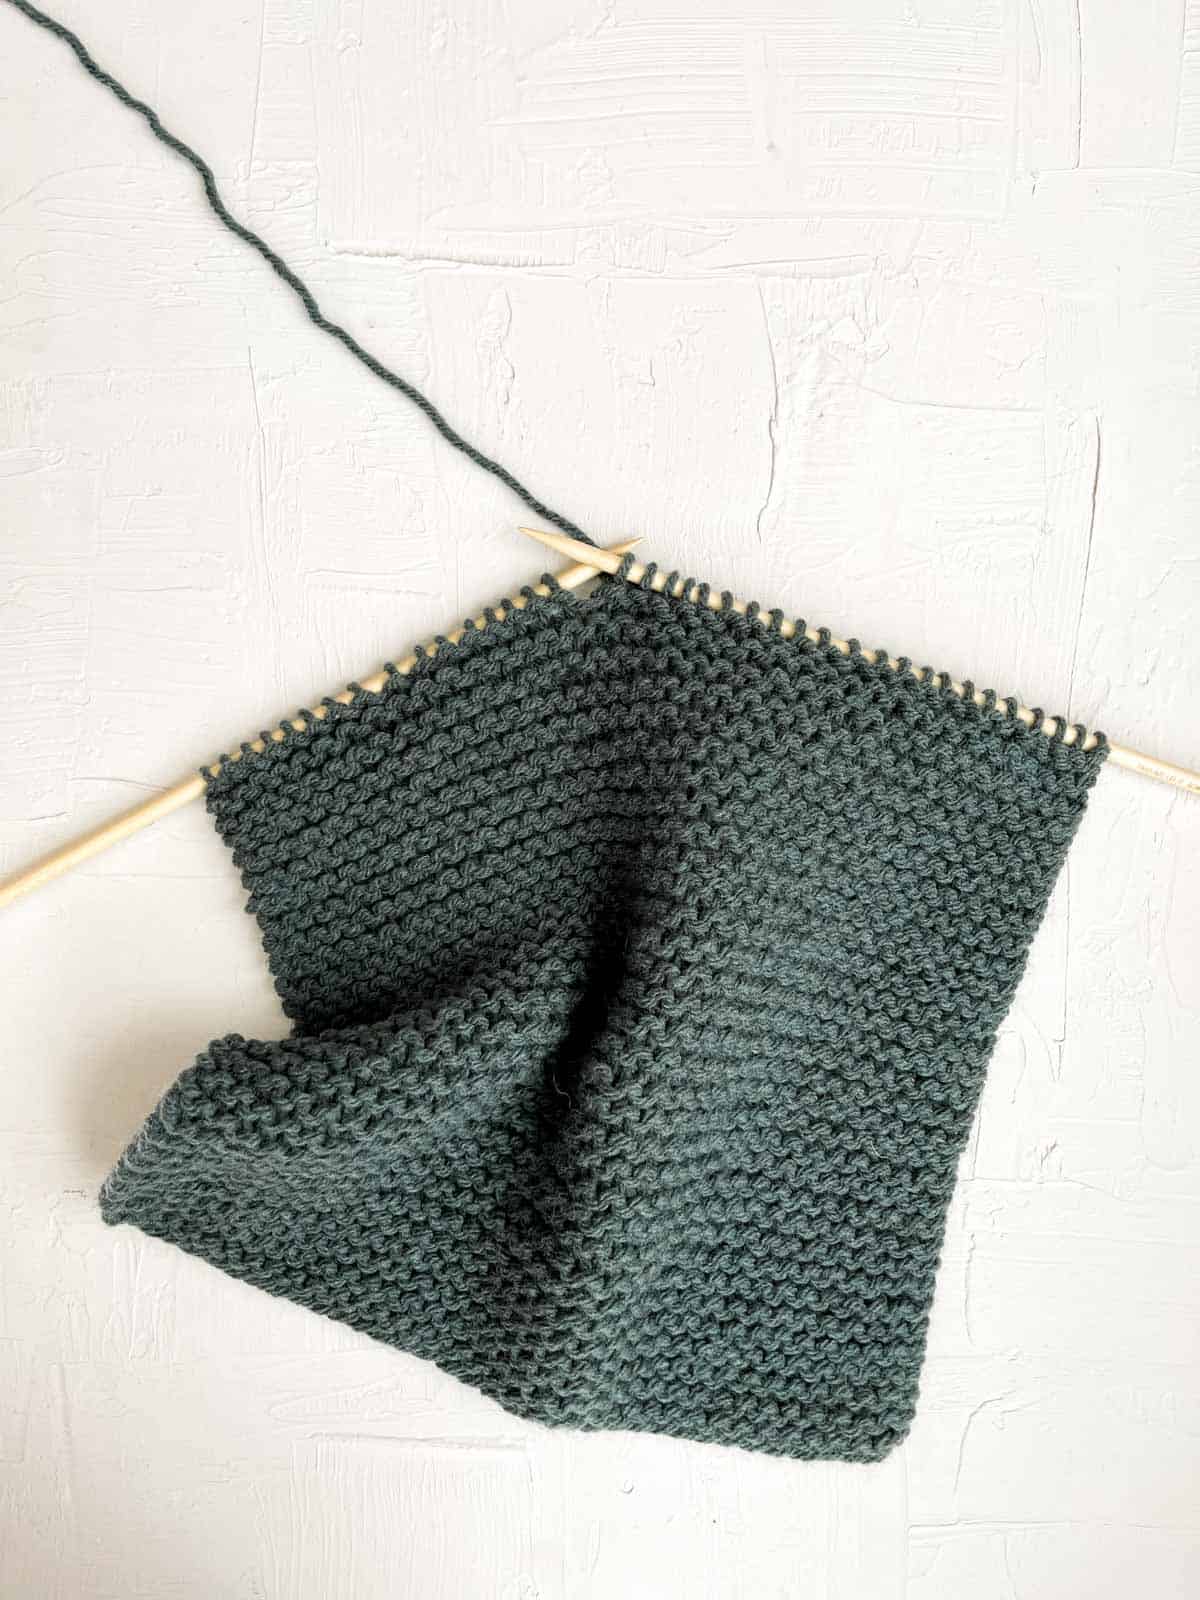 Straight knitting needles working garter stitch in chunky green yarn.